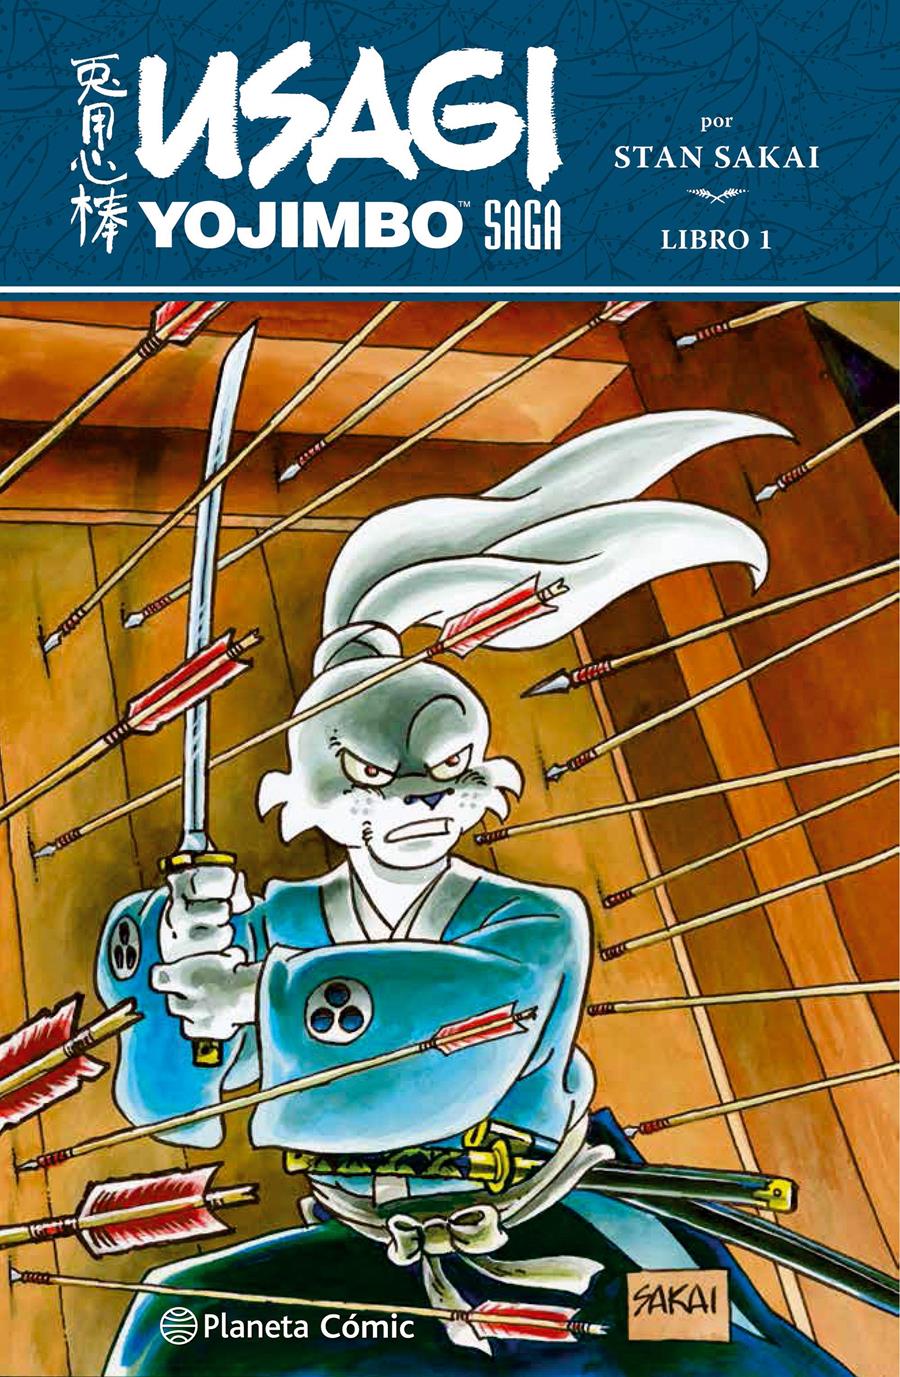 Usagi Yojimbo Saga nº 01 | N1017M-PLA24 | Stan Sakai | Terra de Còmic - Tu tienda de cómics online especializada en cómics, manga y merchandising